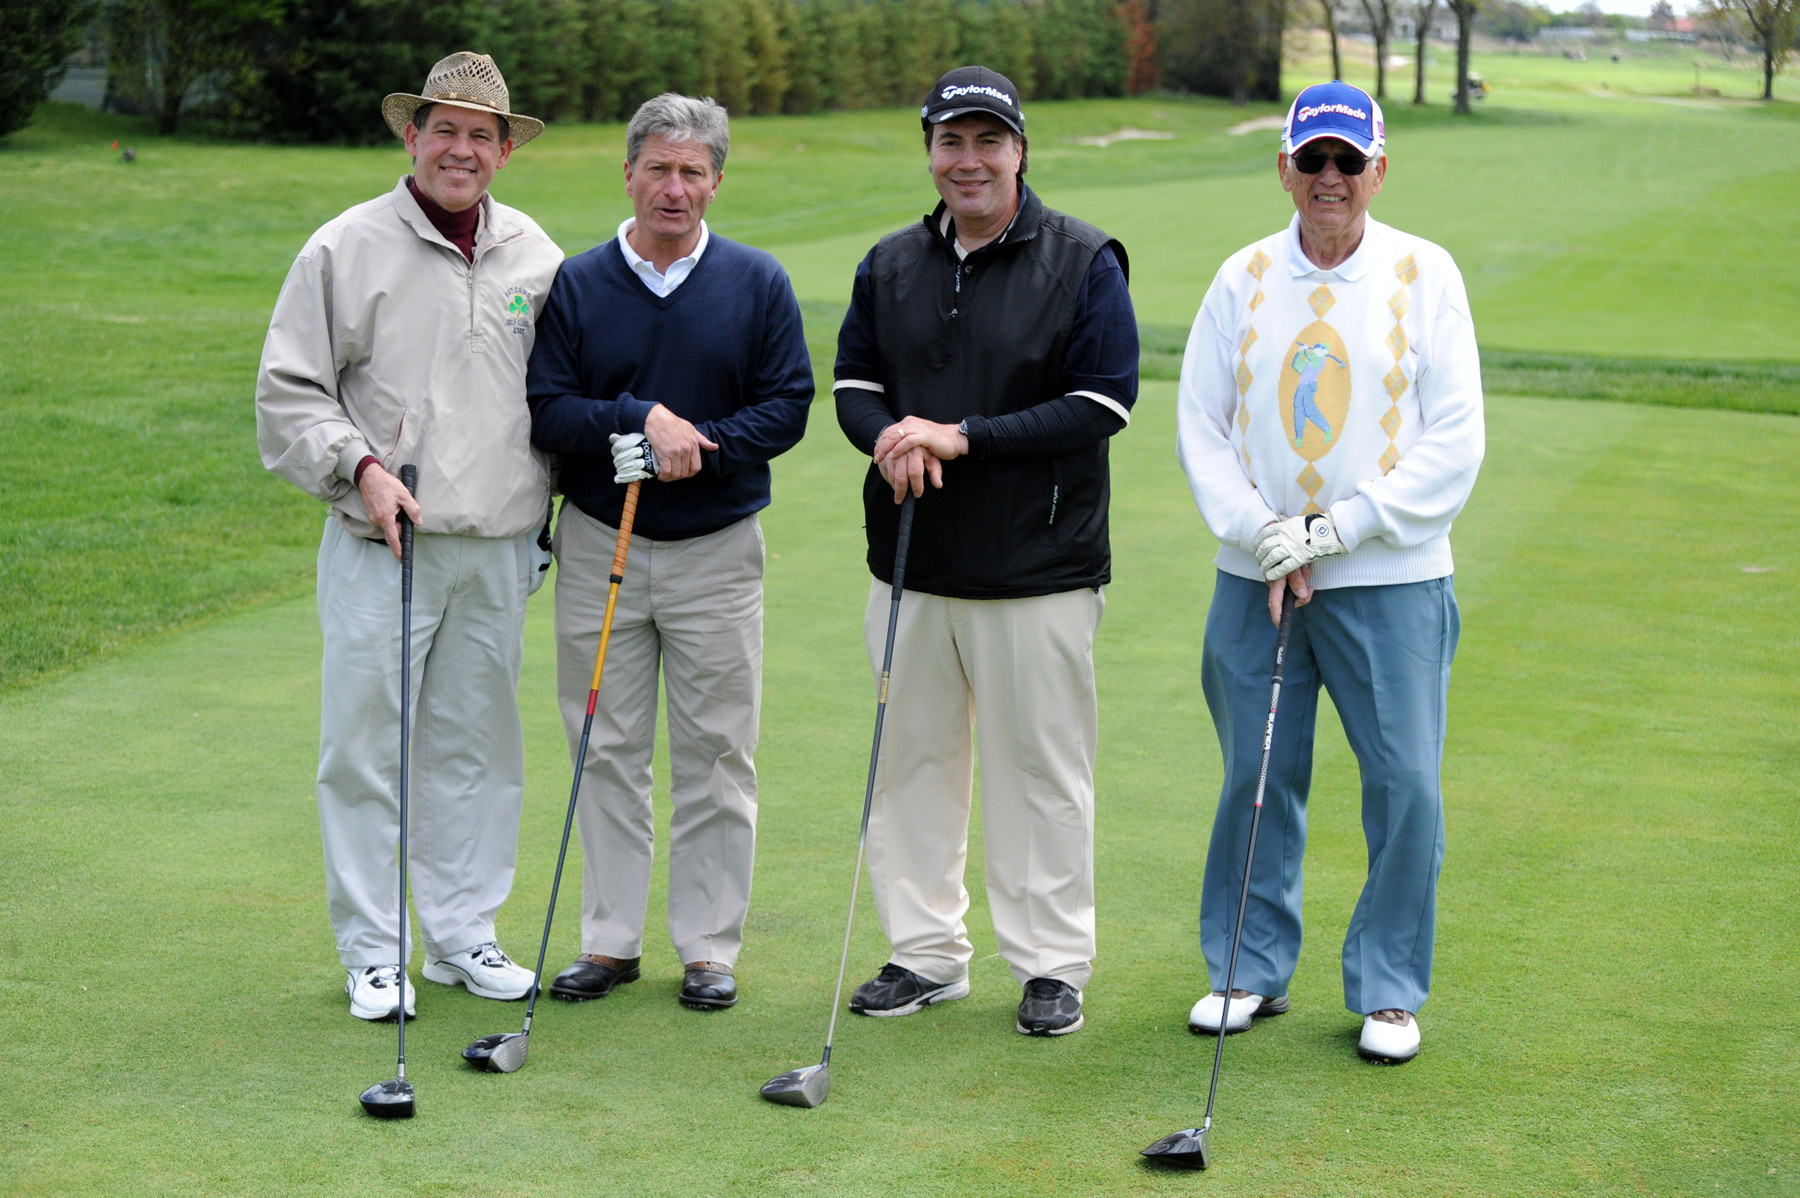 Francis Becker, Jr., Dennis Farrell, John Giordano, Phil Giordano enjoyed a round of golf.